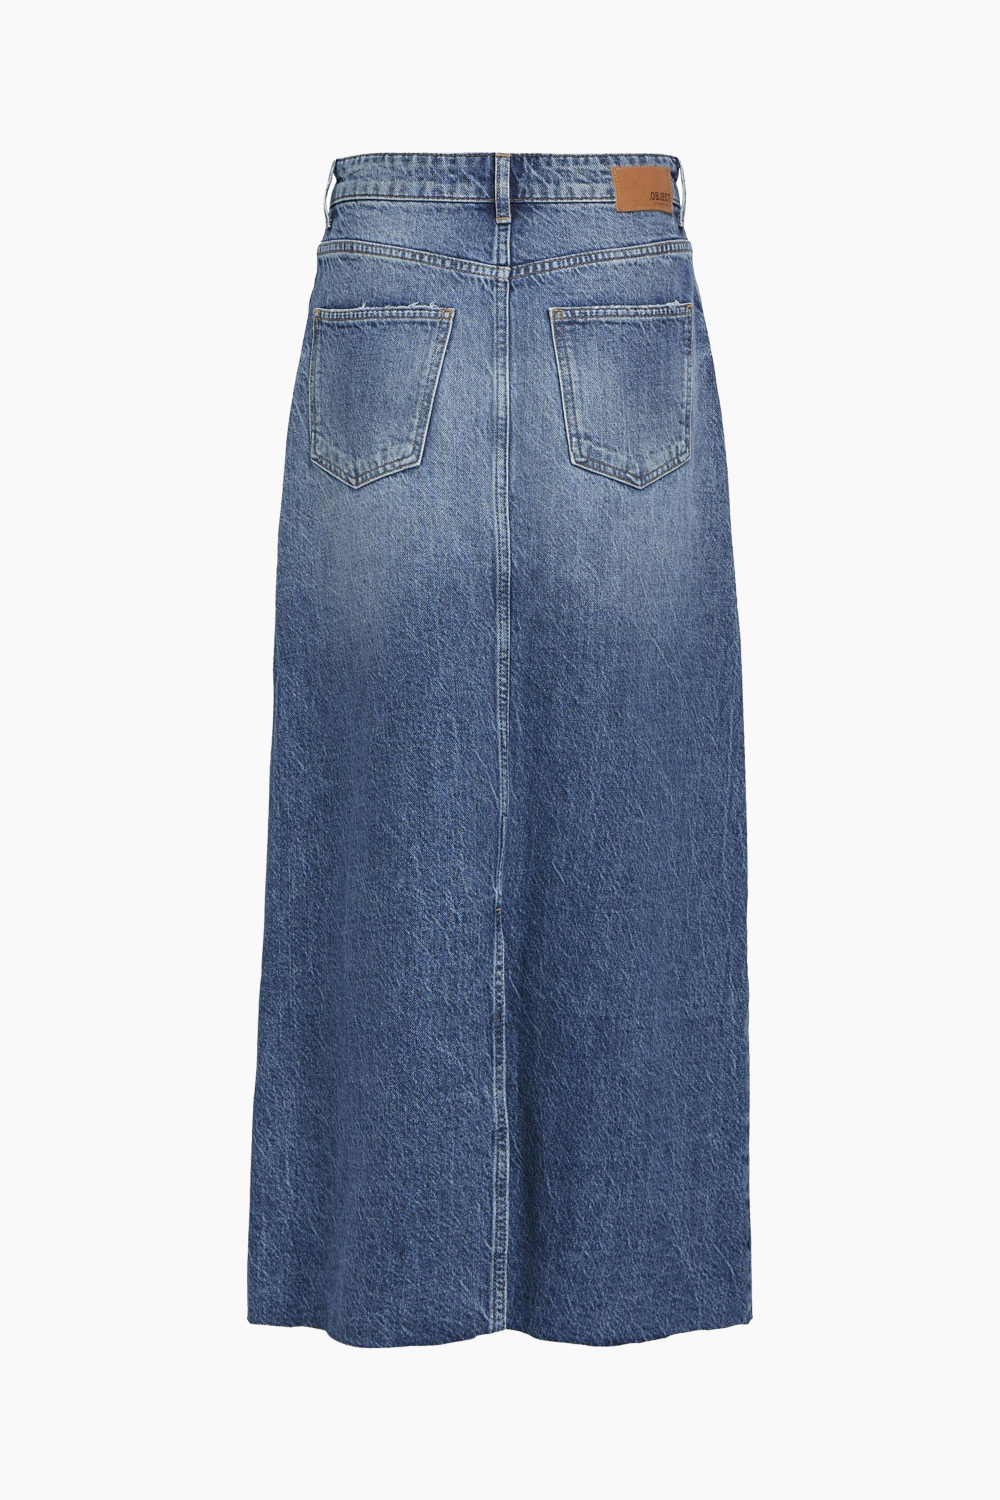 ObjHarlow Long Denim Skirt - Medium Blue Denim - Object